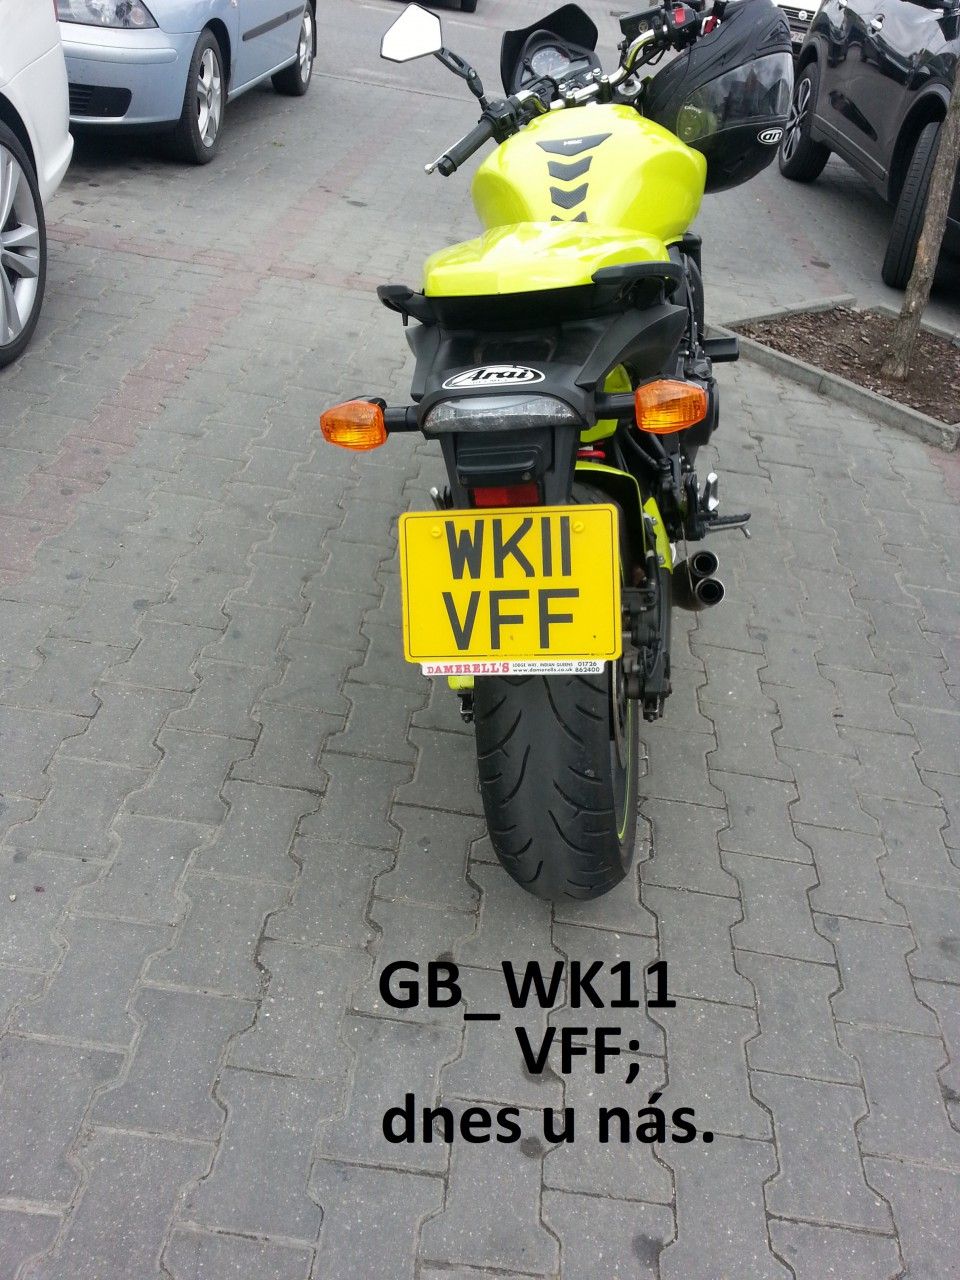 GB_WK11 VFF, tzv. celopsmenkov, taktie dnes u ns na tom istom parkovisku.